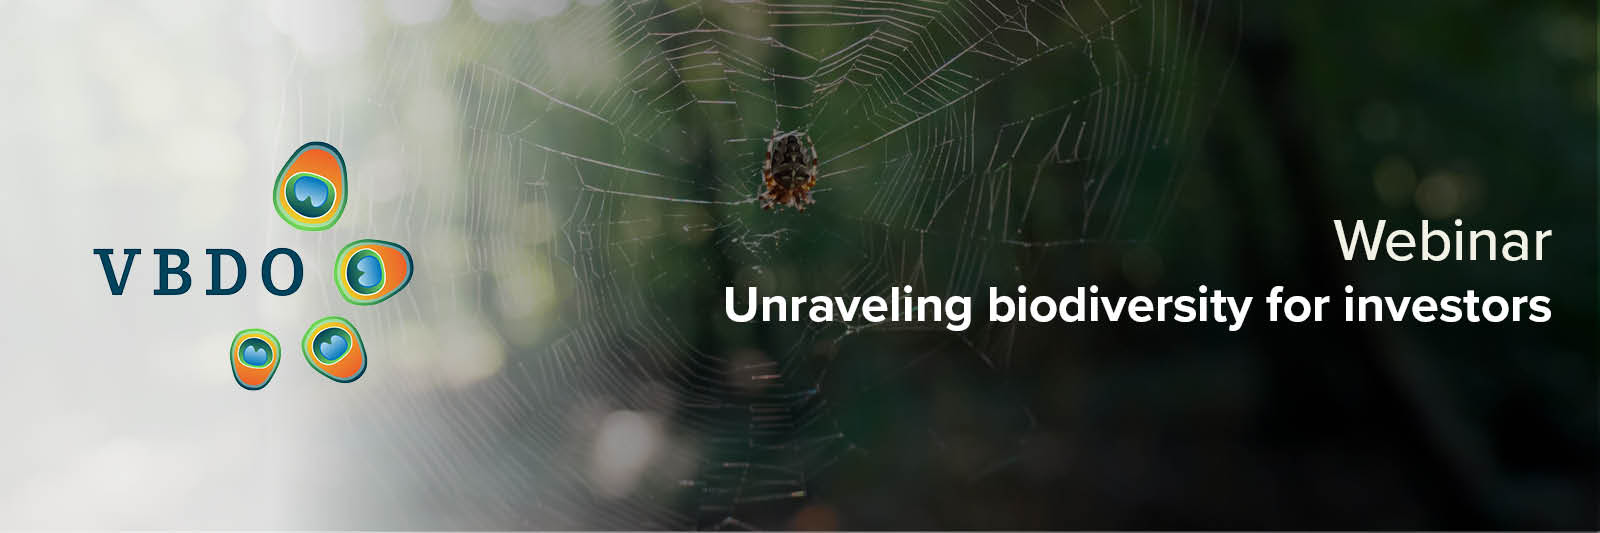 Webinar 'Unraveling biodiversity'